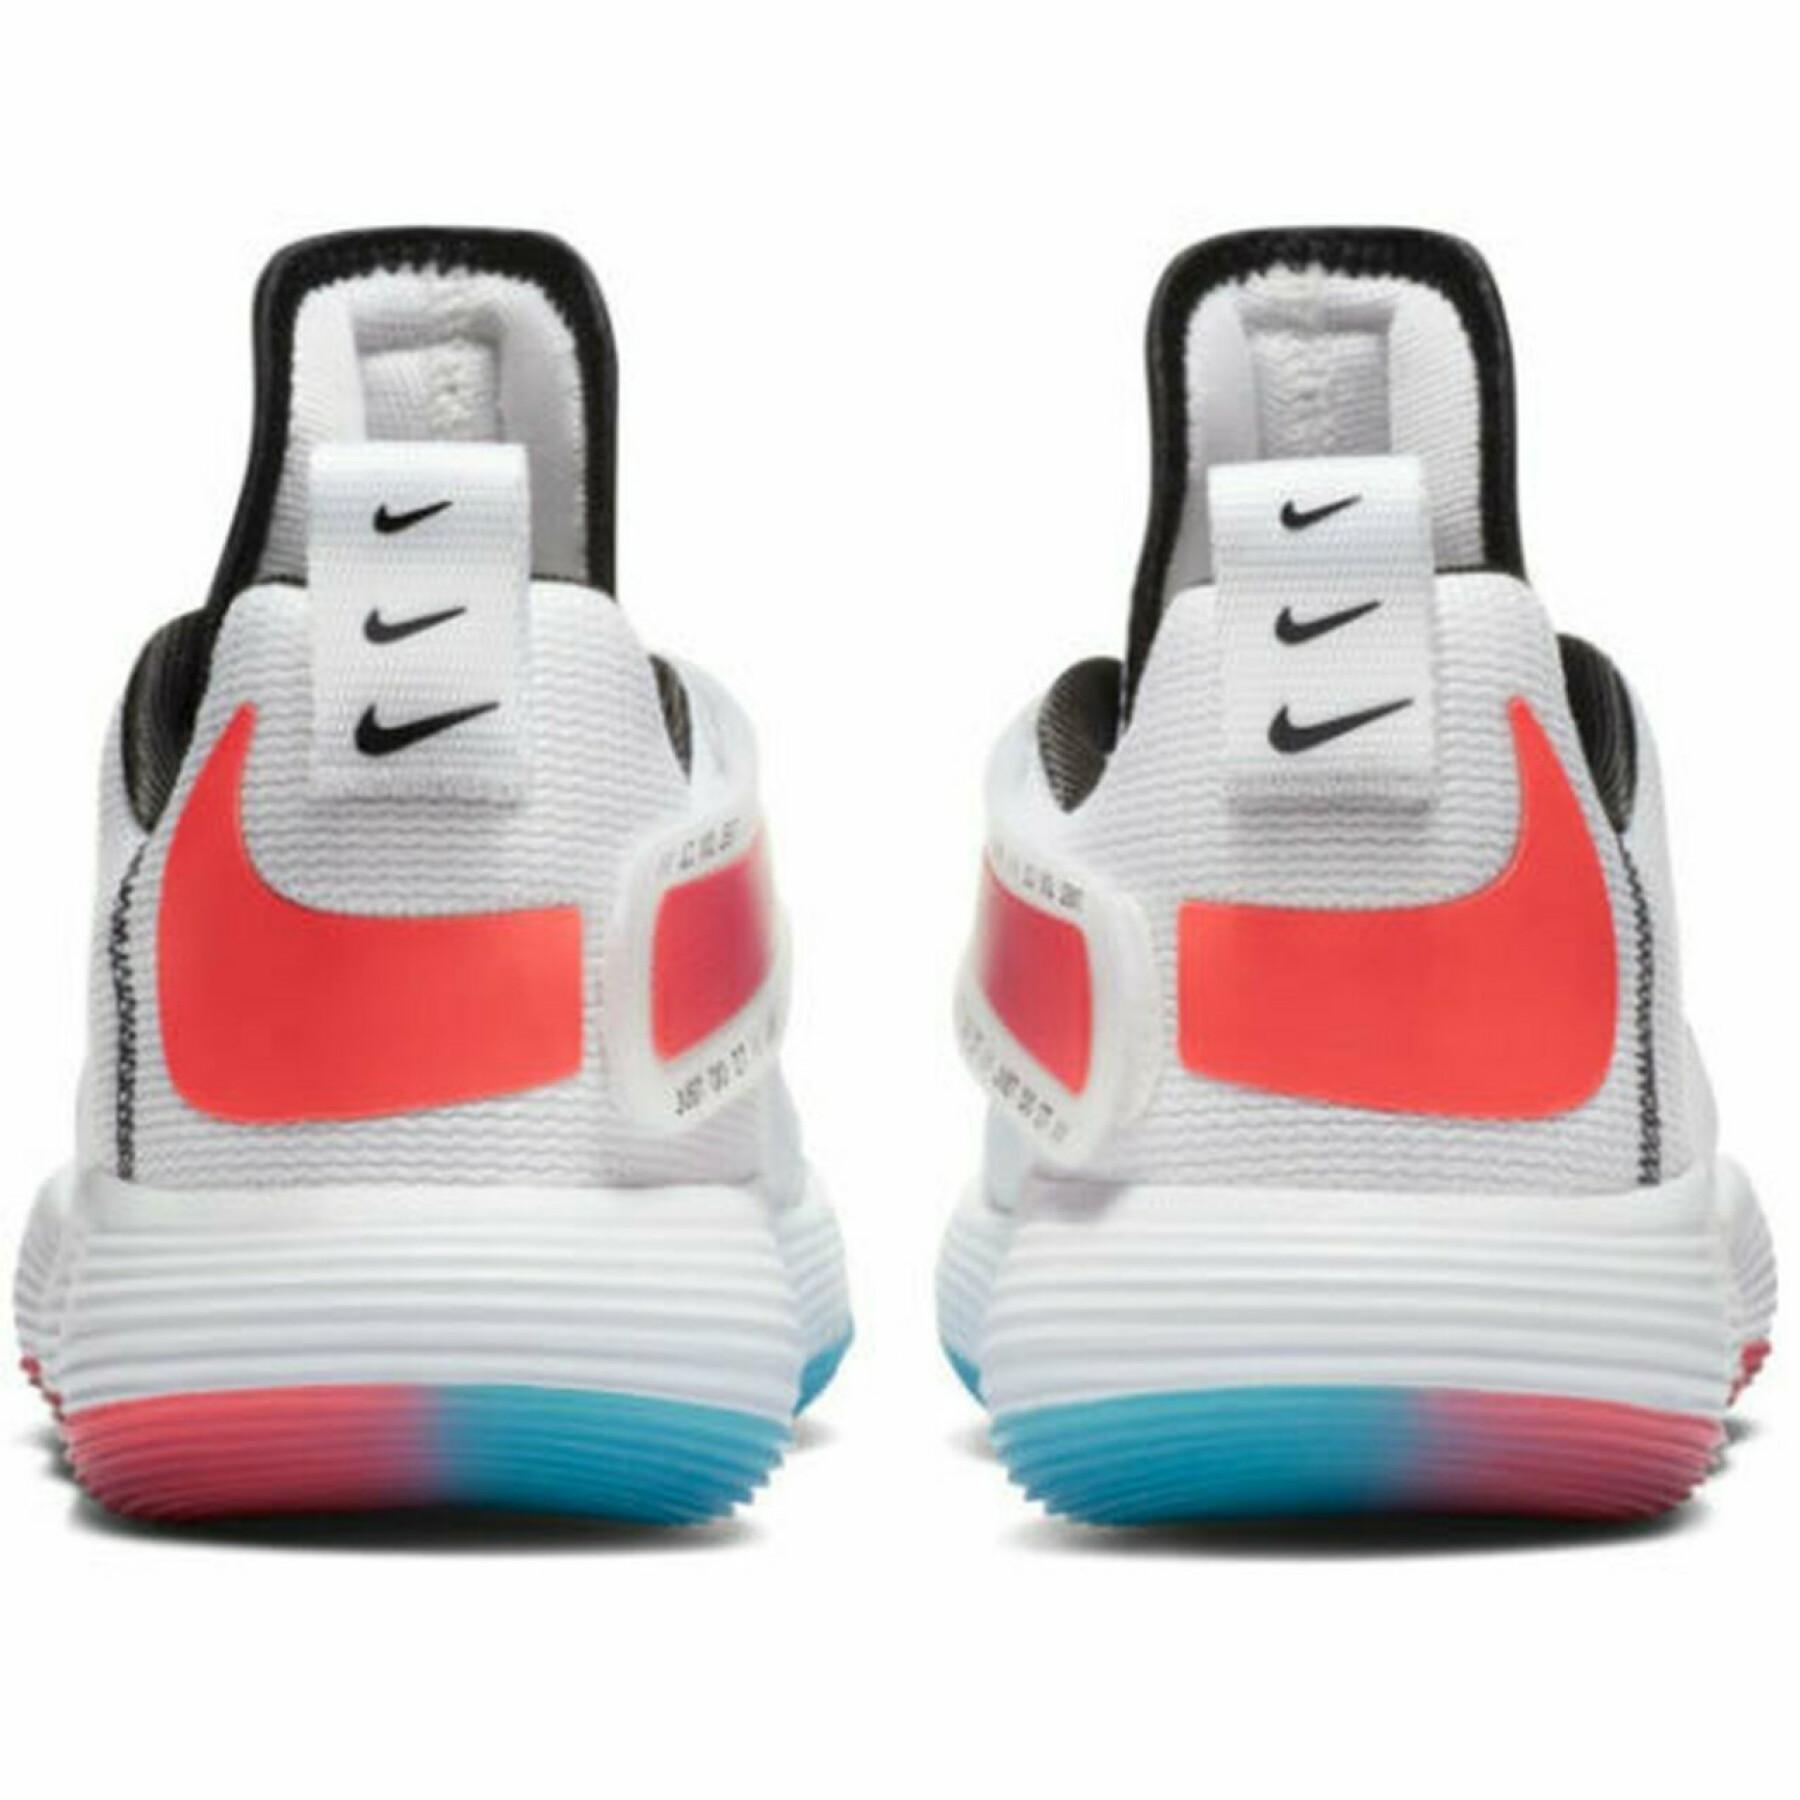 Zapatos Nike React Hyperset Olympics